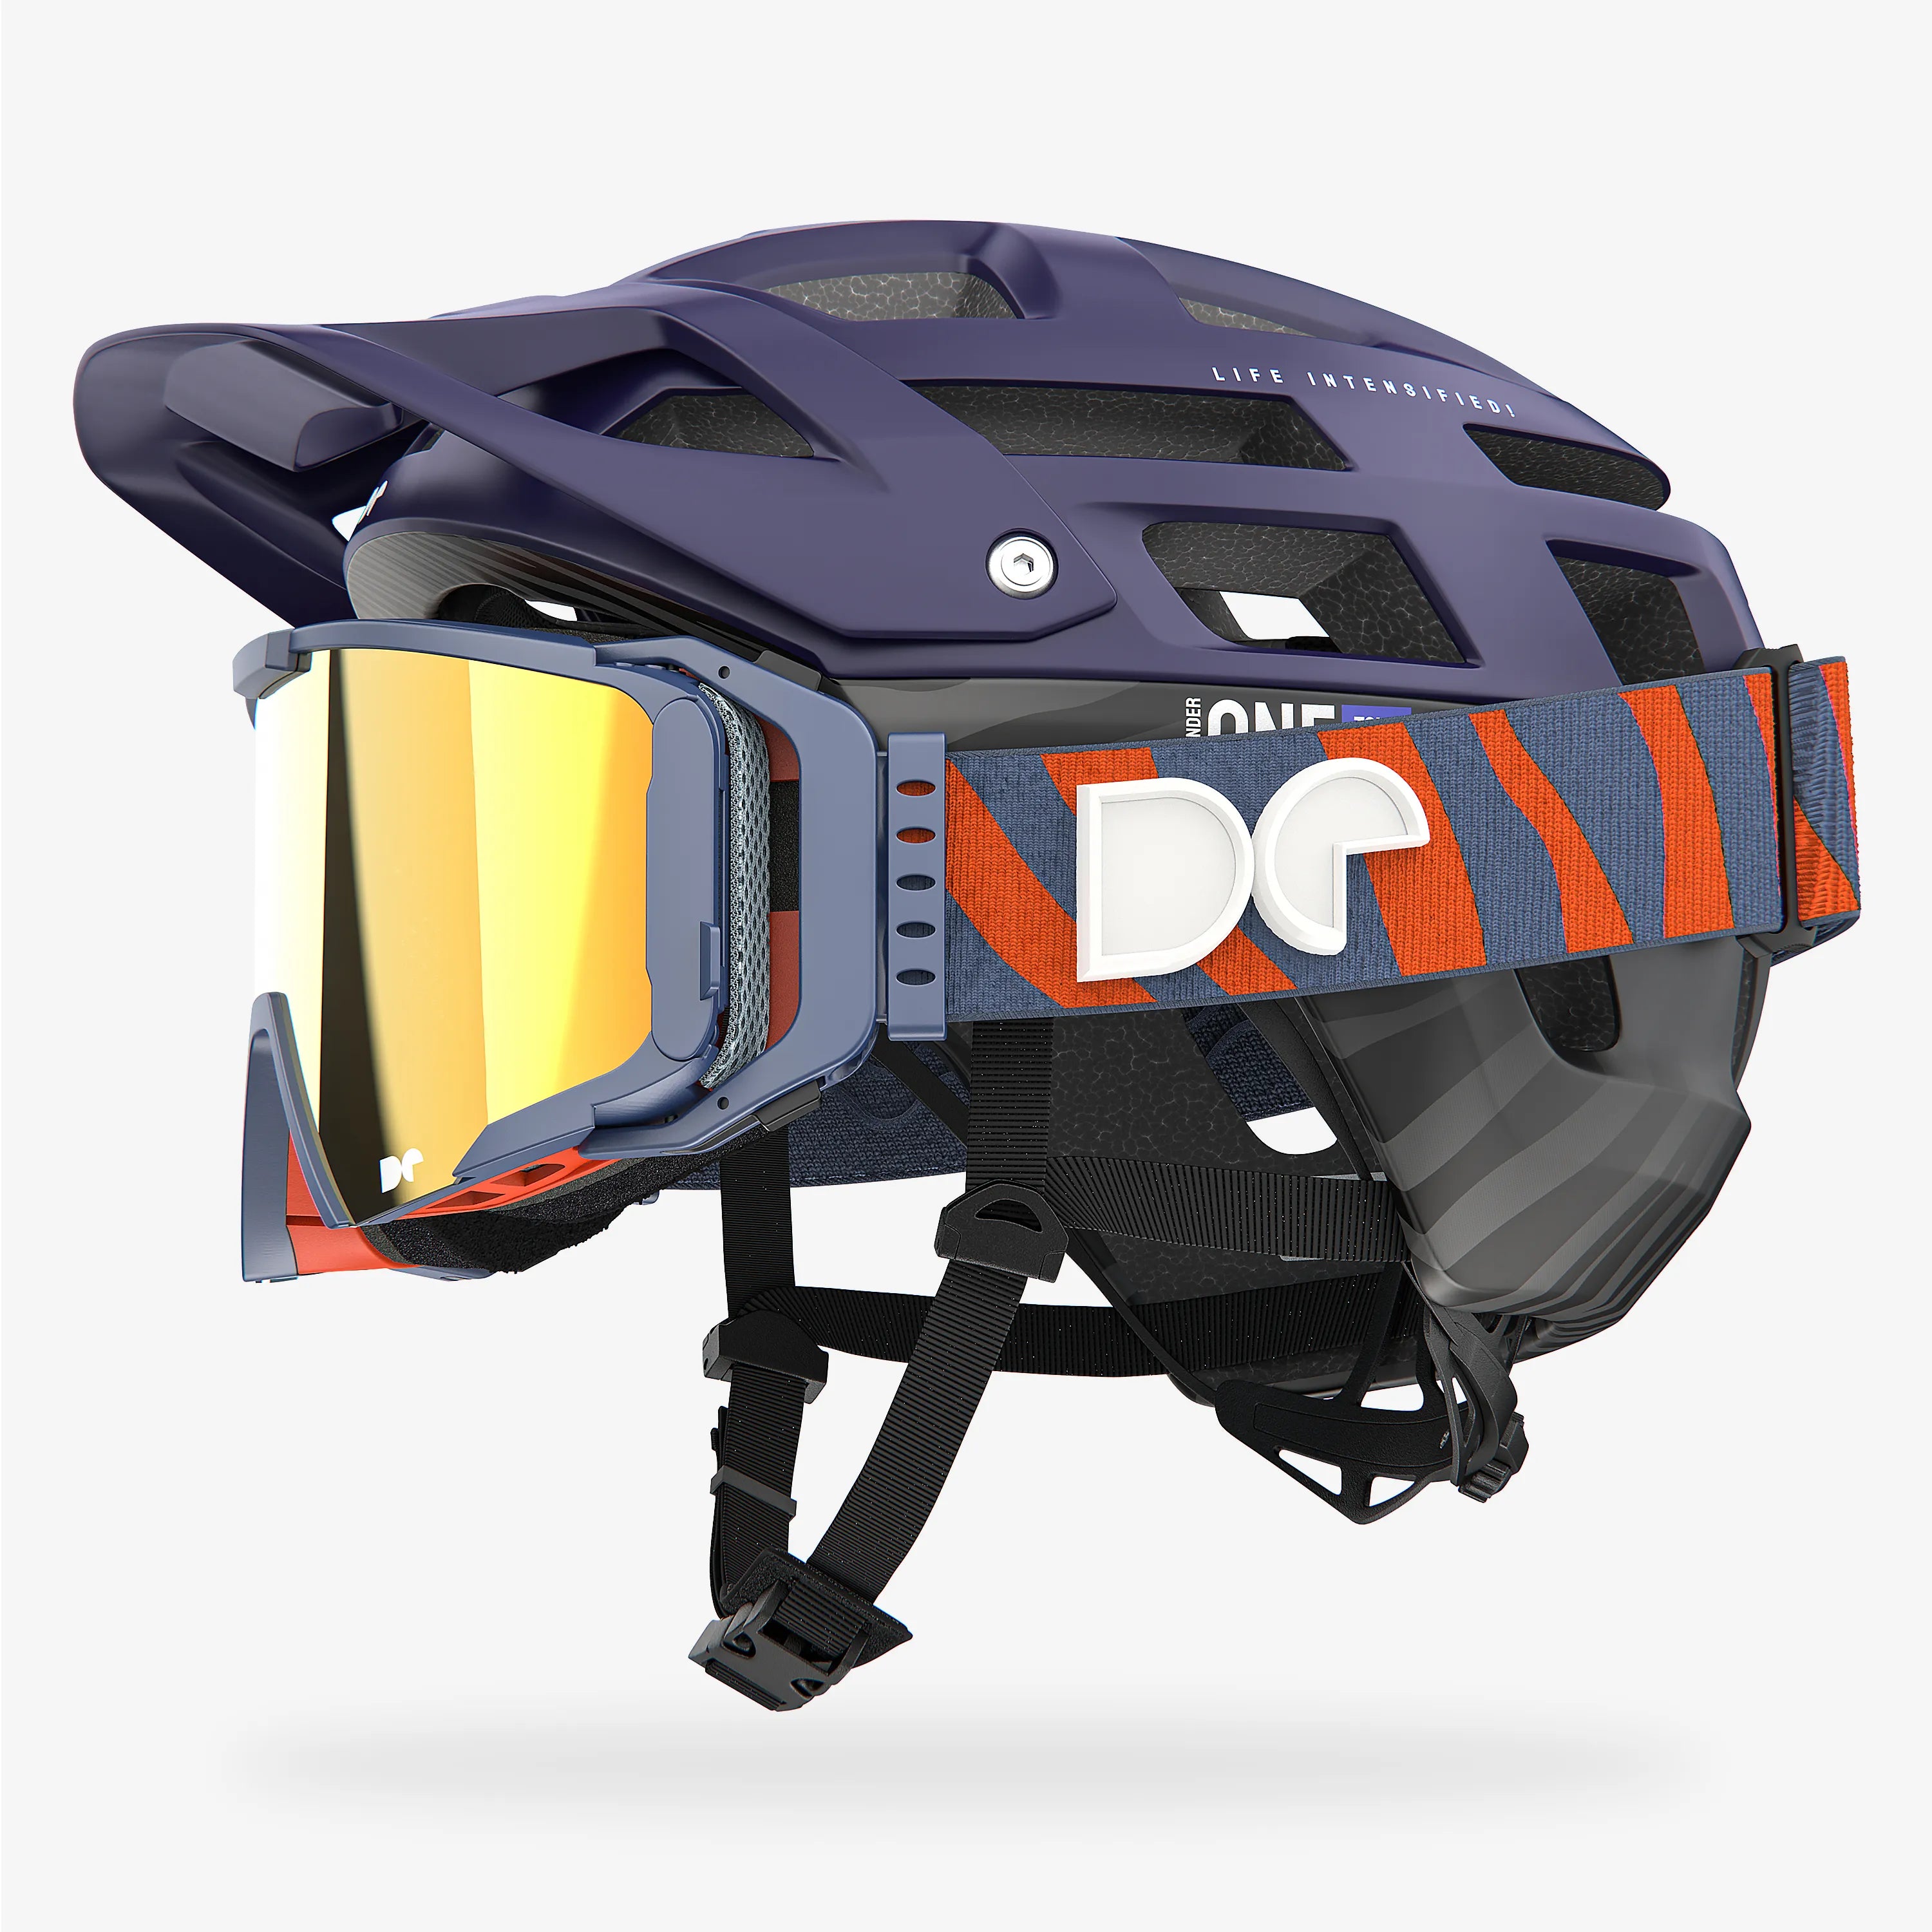 Casco de bicicleta de montaña Defender One Tour morado oscuro + gafas Sporter Boostup All Road